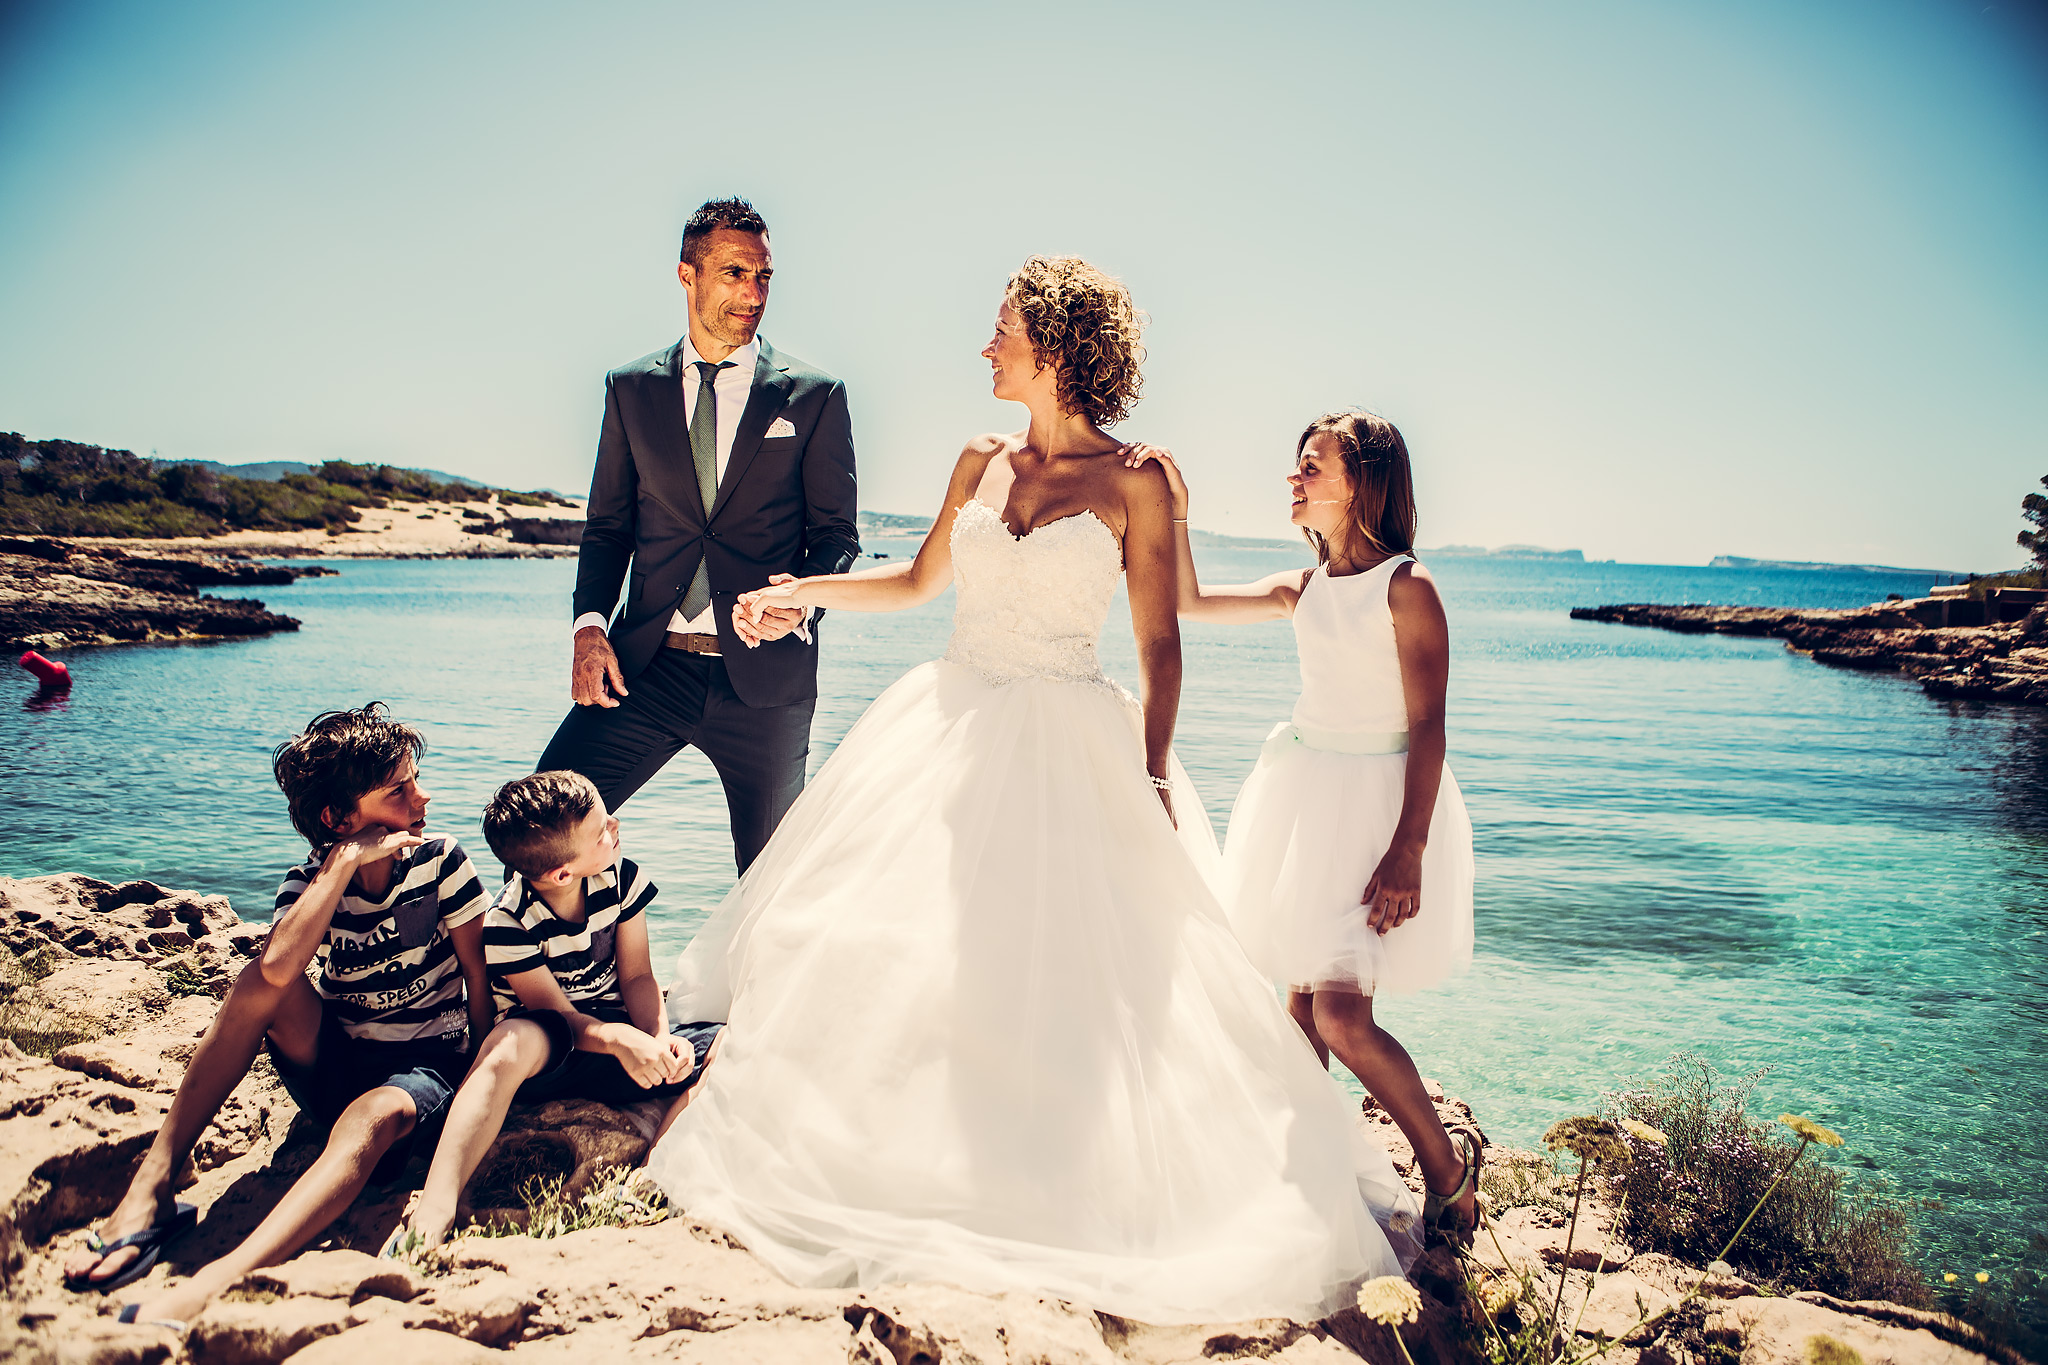 Bruidsreportage Destination Wedding Ibiza Mandy en Joost 016 - Bas Driessen Fotografie